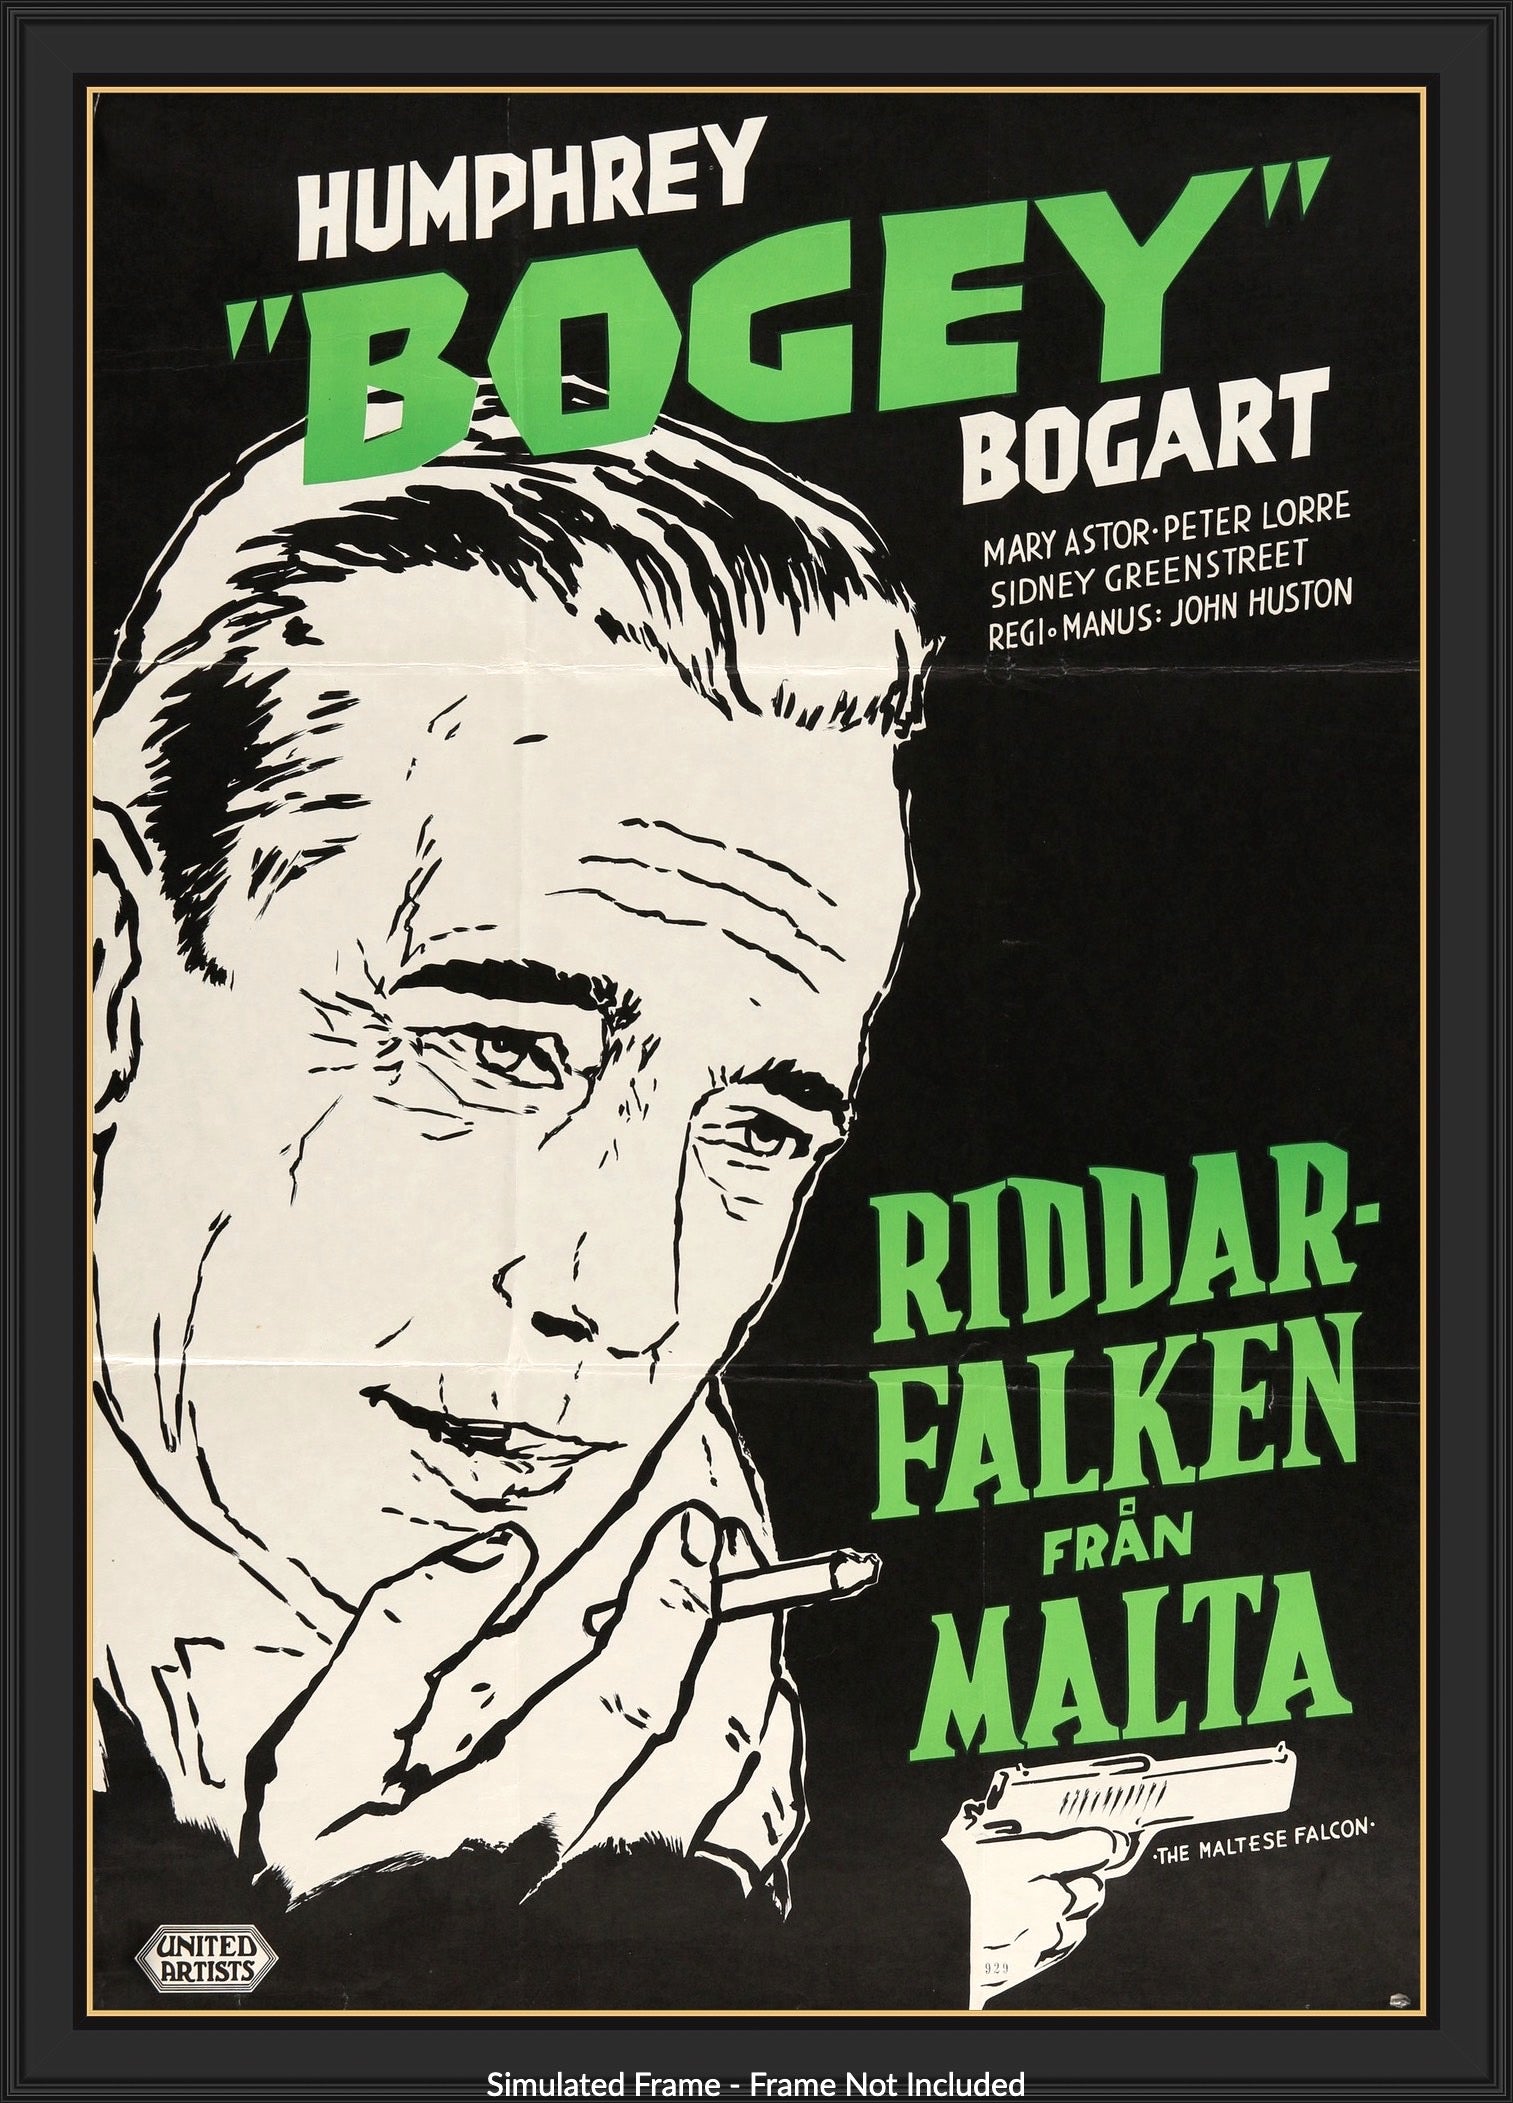 Maltese Falcon (1941) original movie poster for sale at Original Film Art